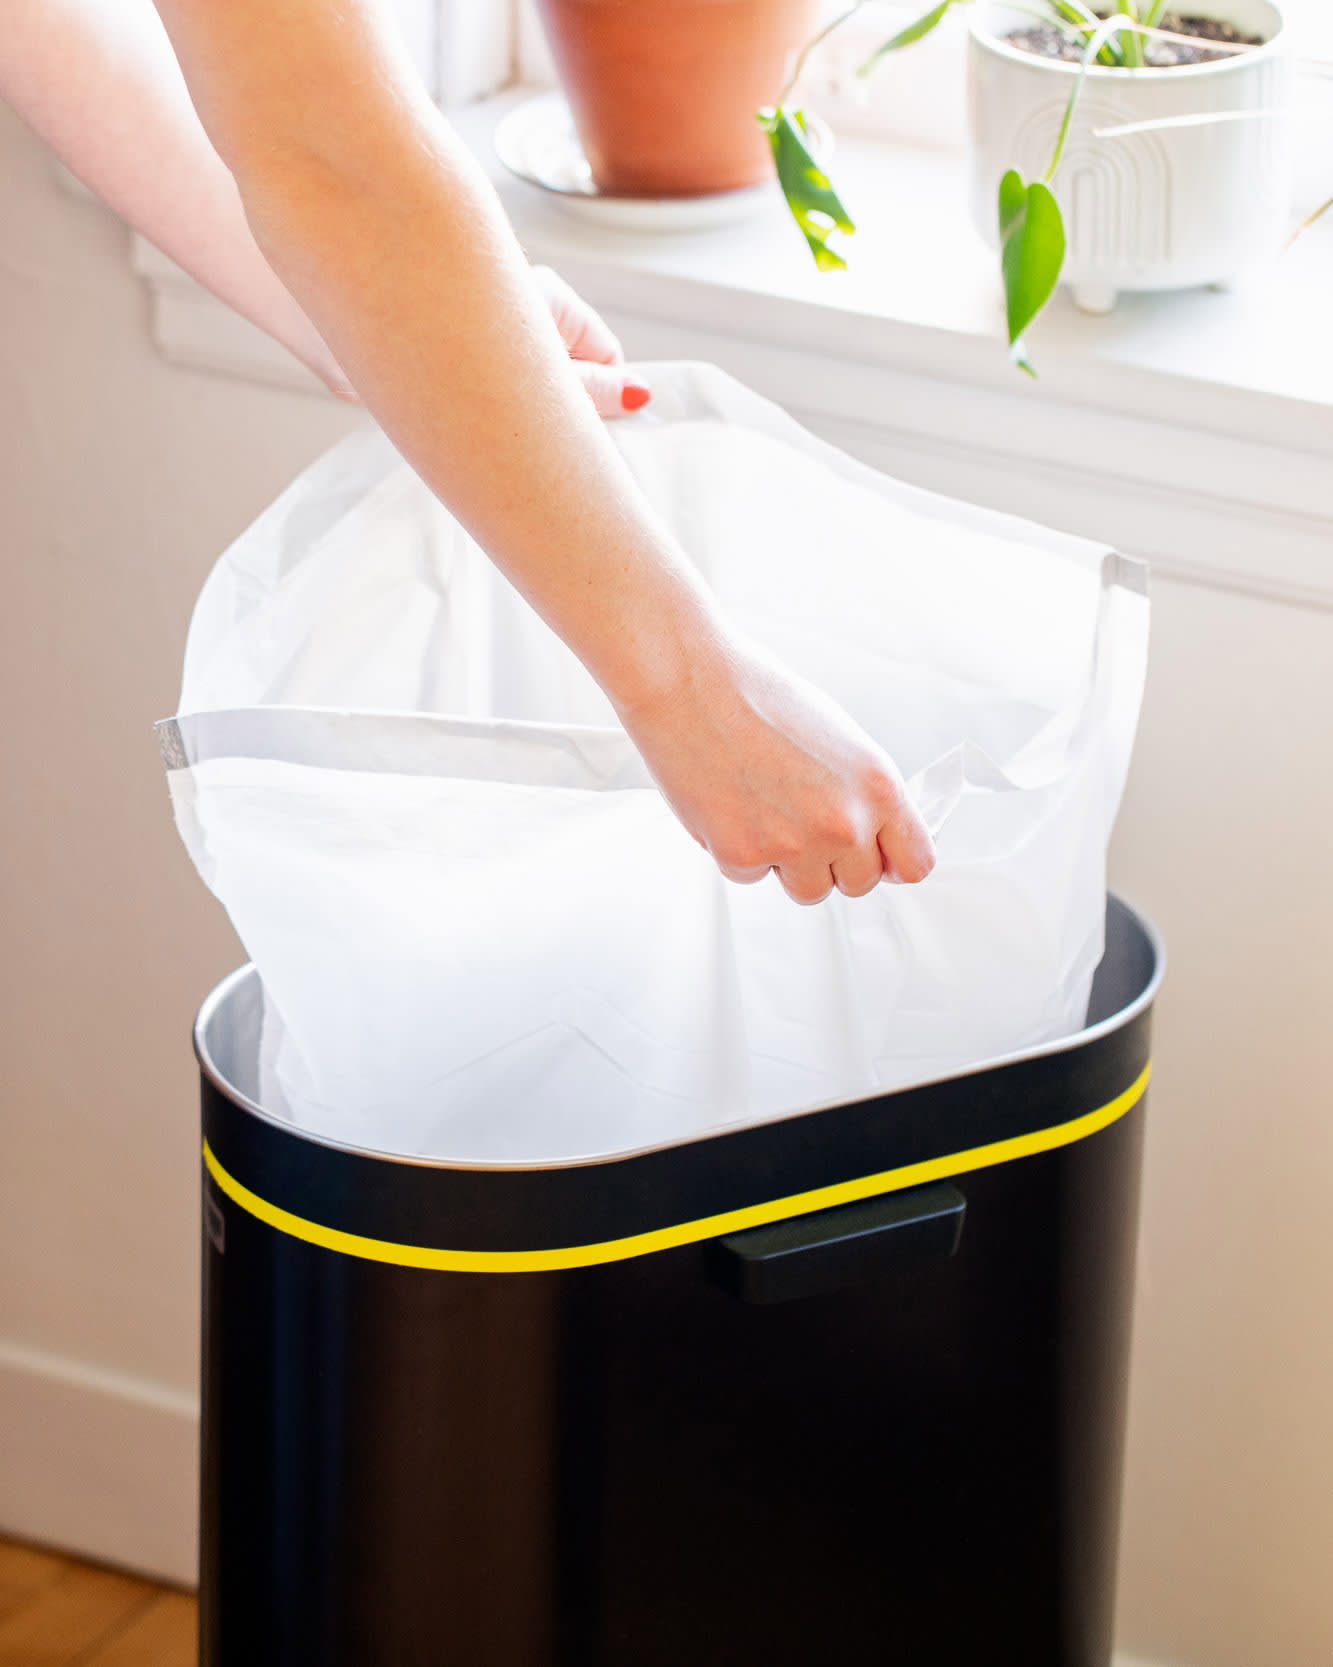 3 in 1 bathroom trash can with waste bin - Top Kitchen Gadget  Bathroom  waste bins, Bathroom trash can, Toilet brush holders